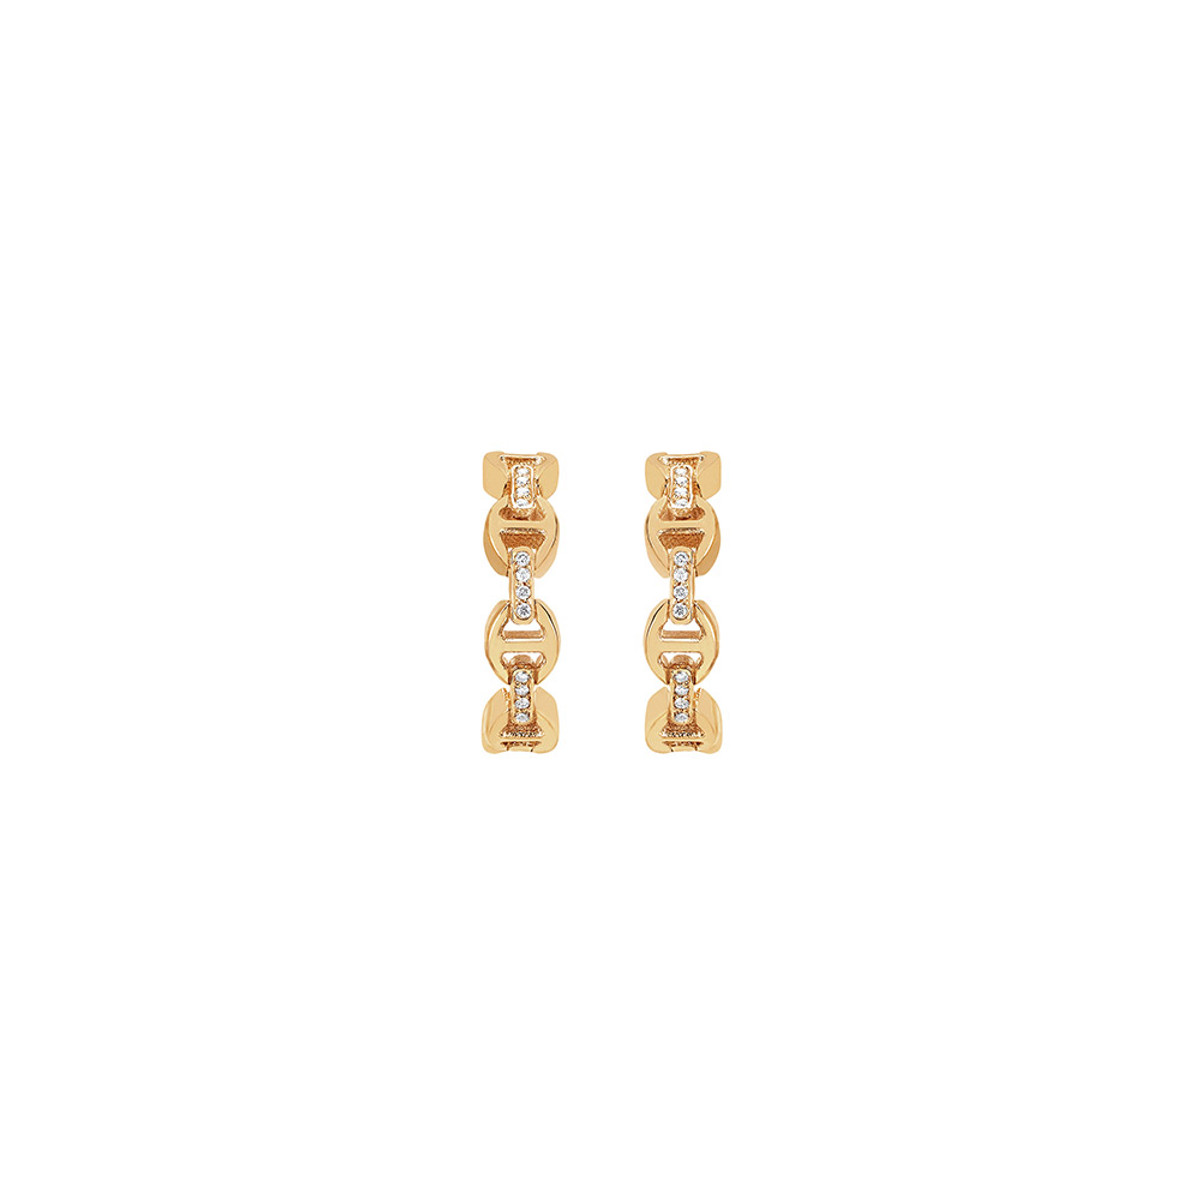 Hoorsenbuhs 18K Yellow Gold Micro Crescent with Diamonds Earrings-57474 Product Image